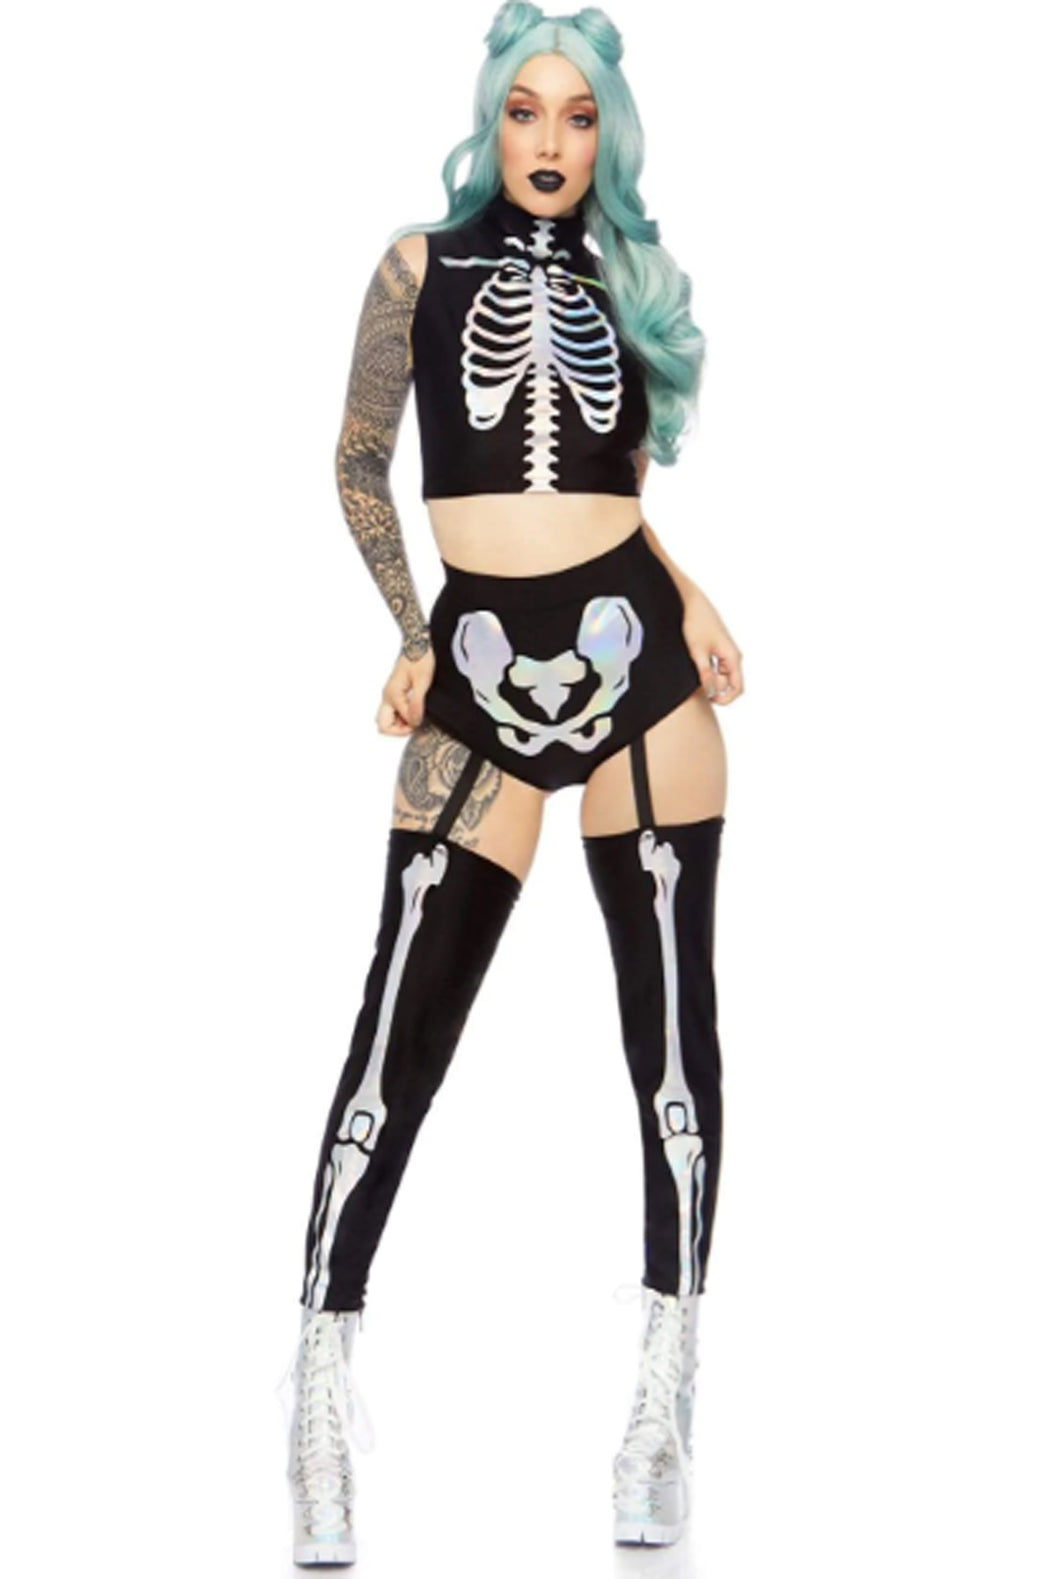 Holographic Skeleton Costume